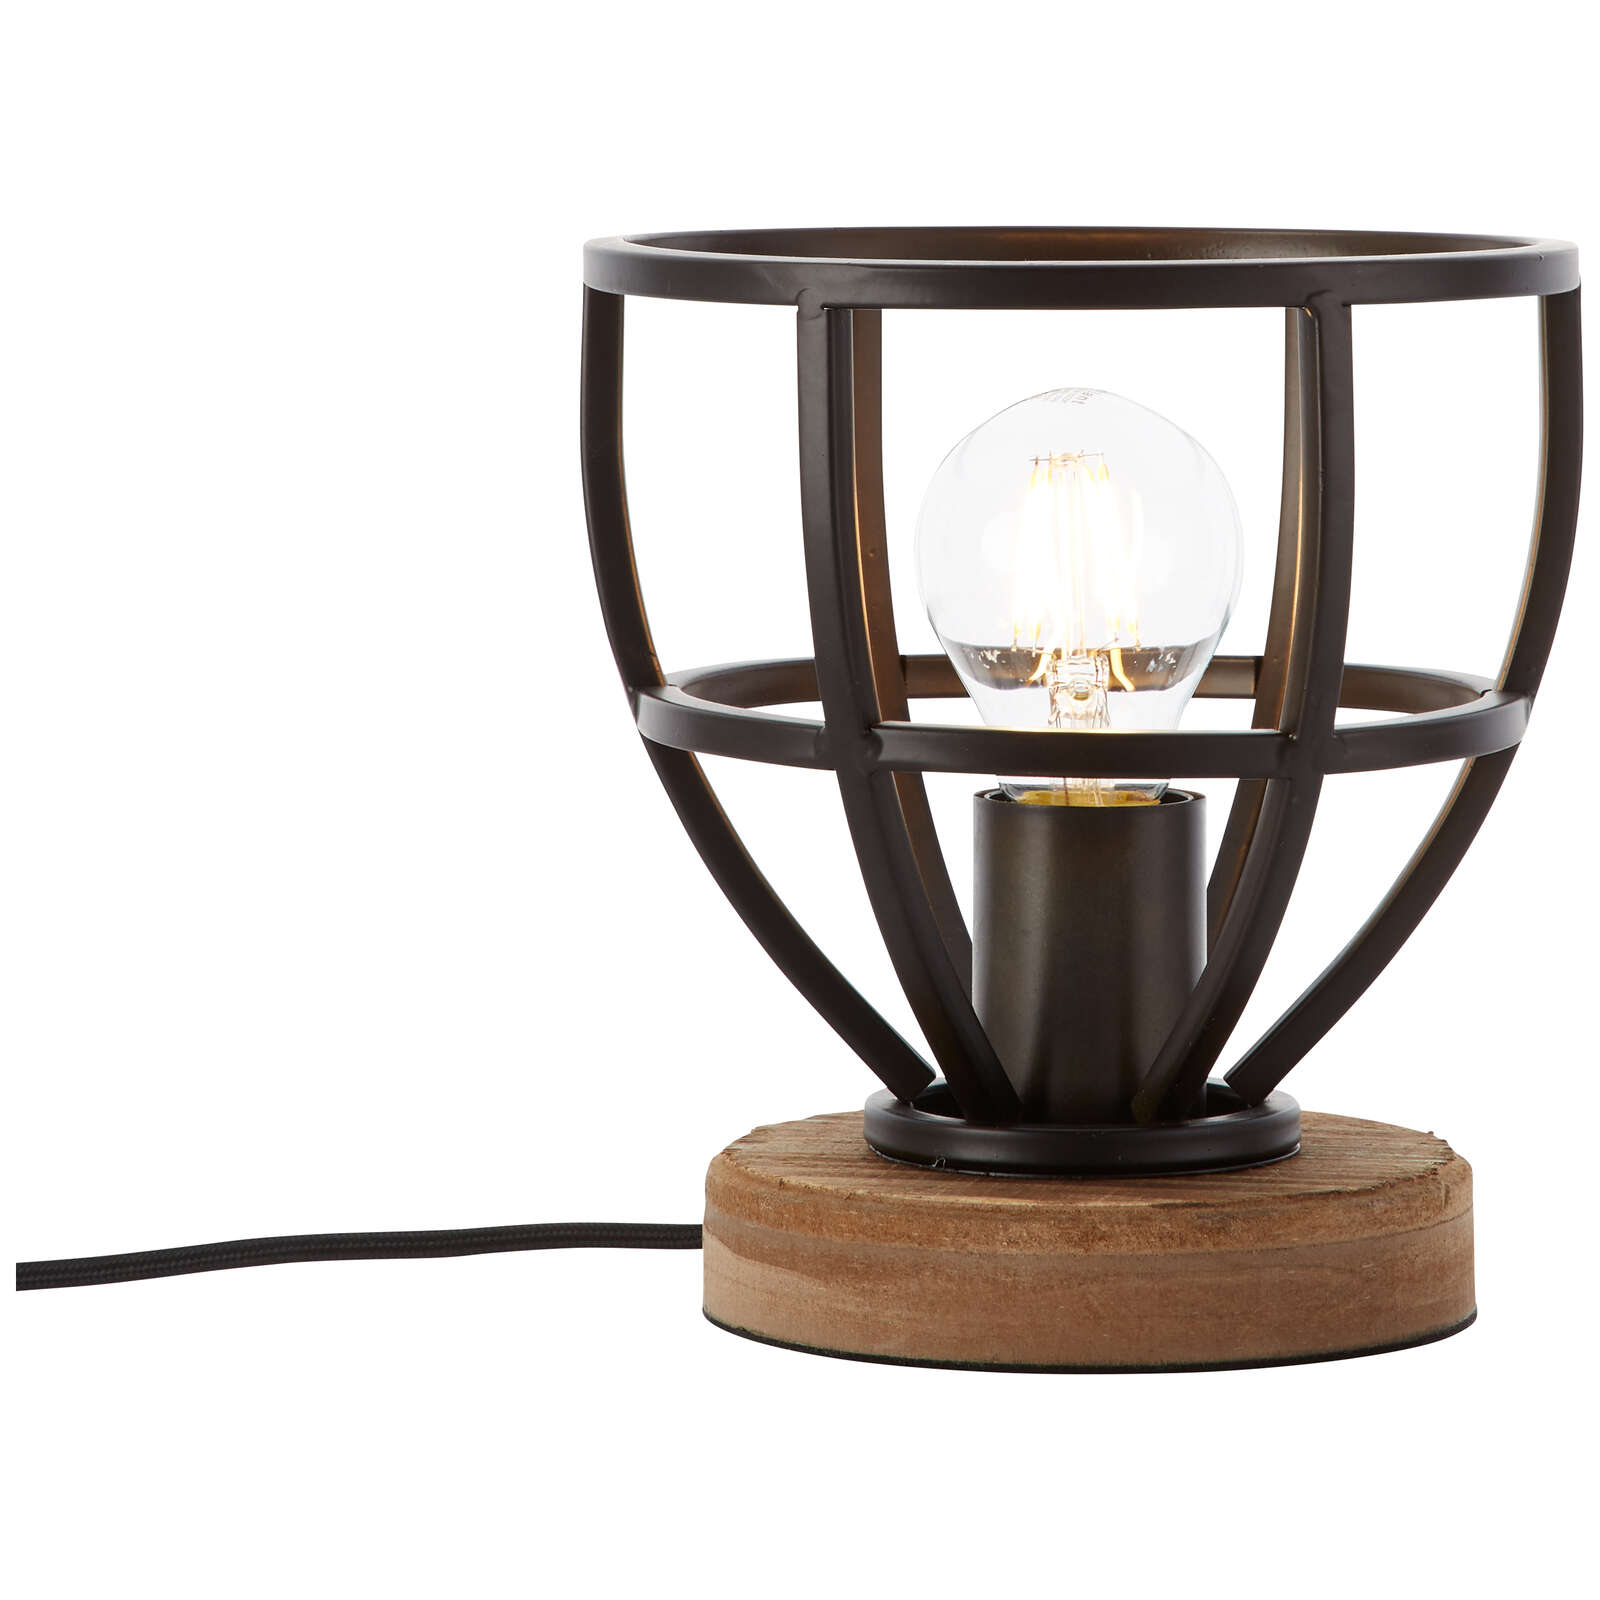             Wooden table lamp - Leonie 8 - Black
        